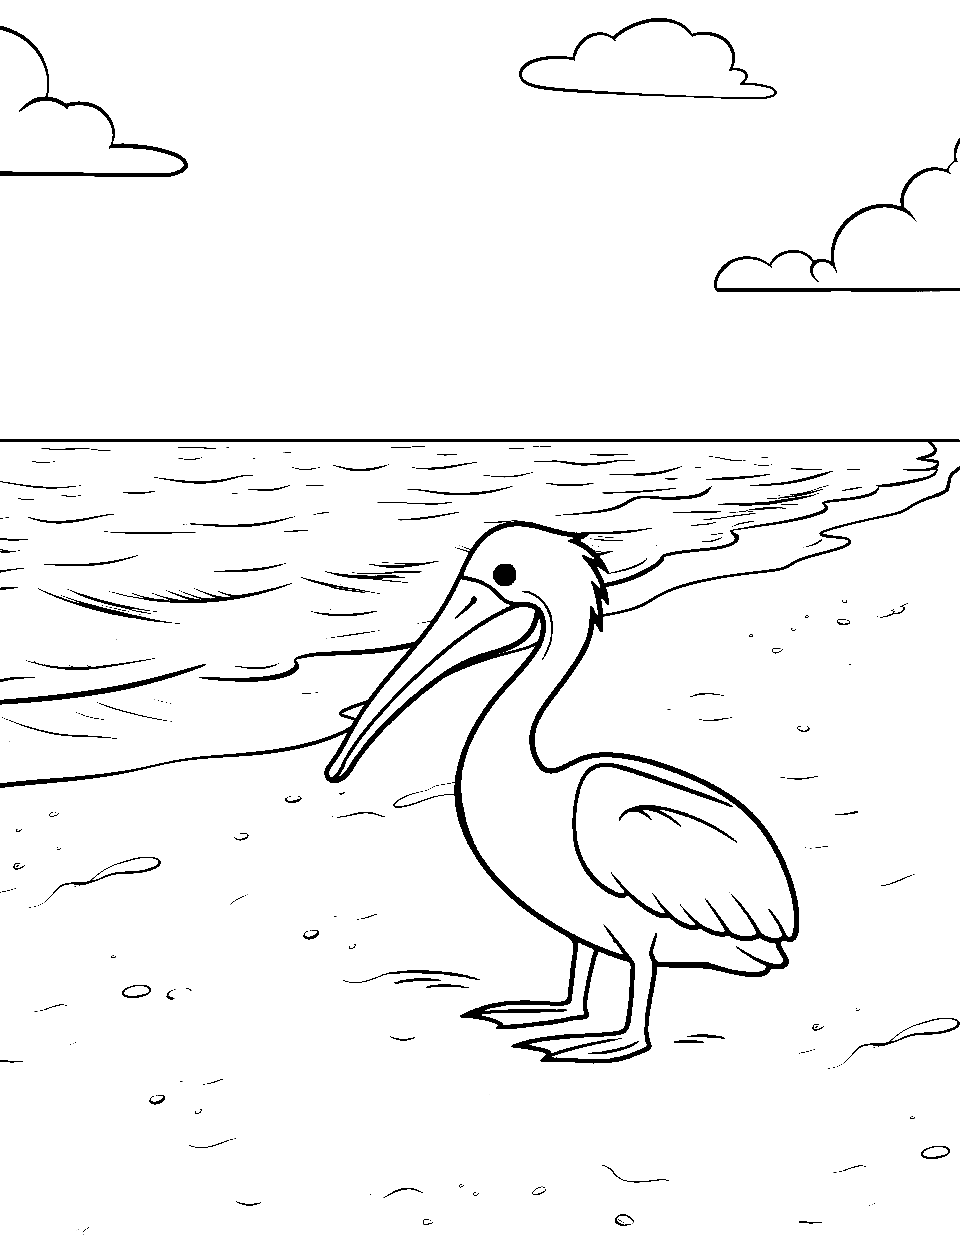 Pelican Standing on a Beach Ocean Coloring Page - A pelican standing on a beach after landing.